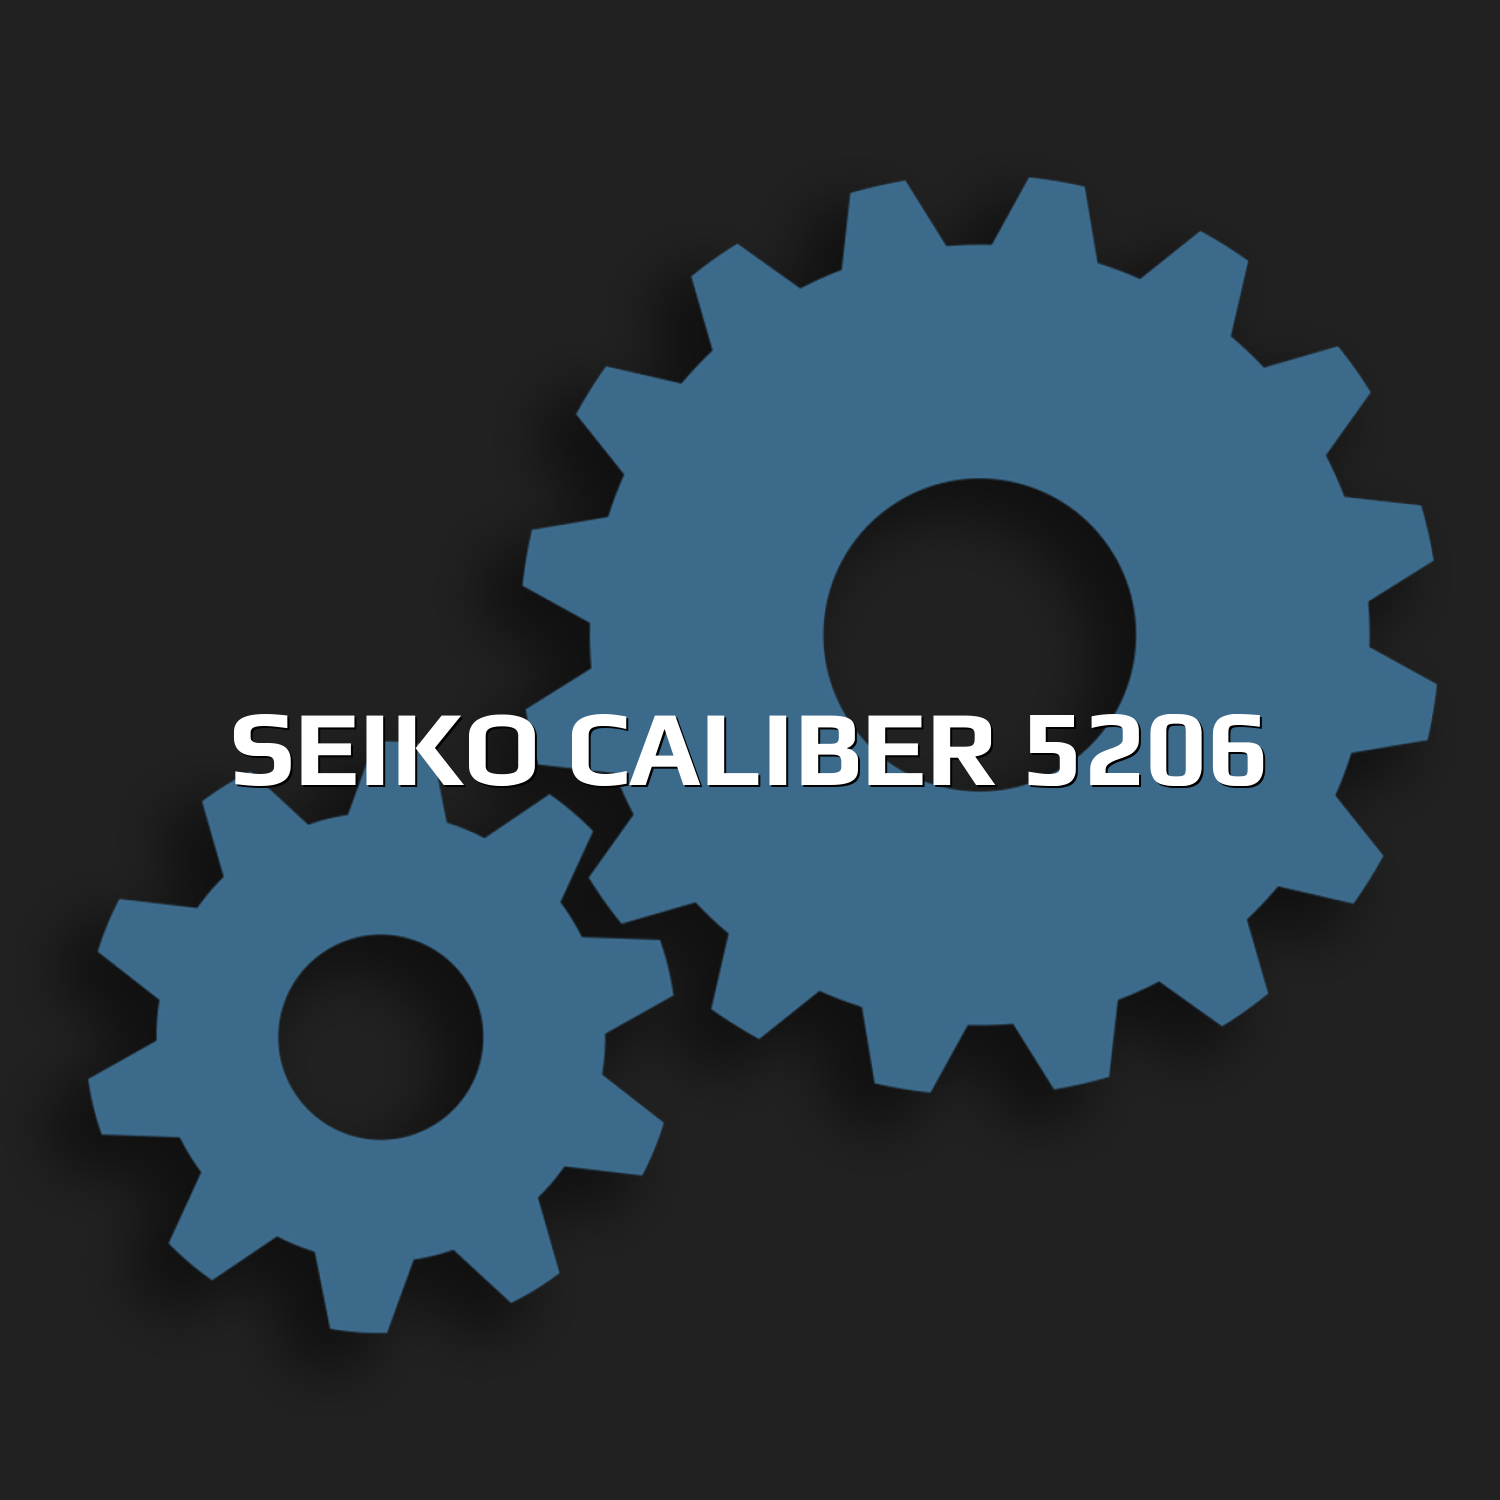 Seiko Caliber 5206